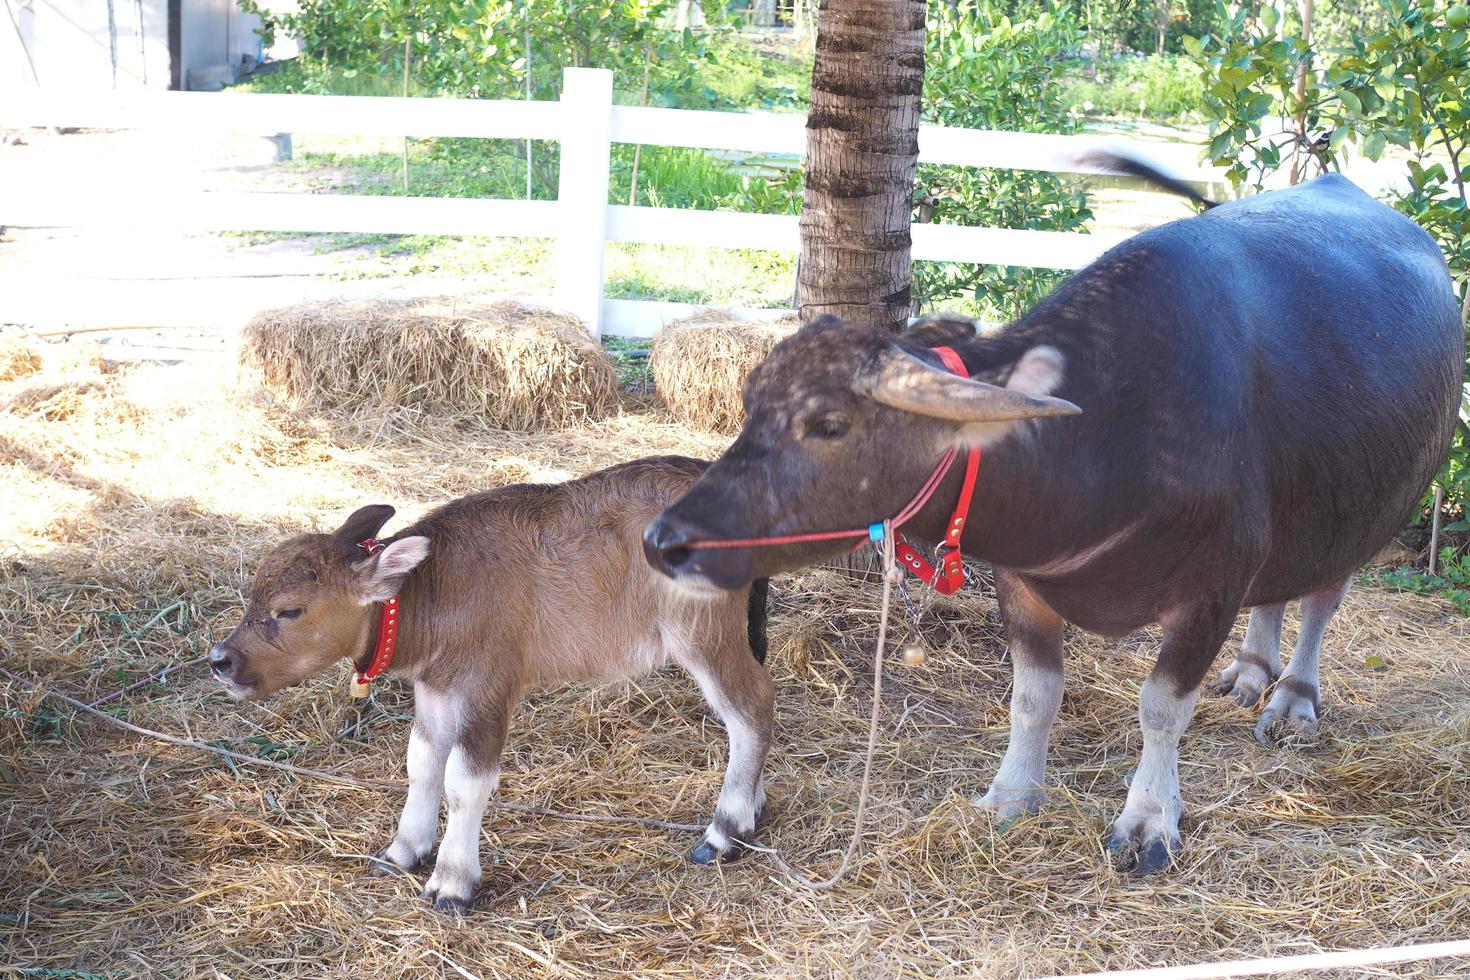 The buffalo mother and baby buffalo are inside the Asian farm. photo